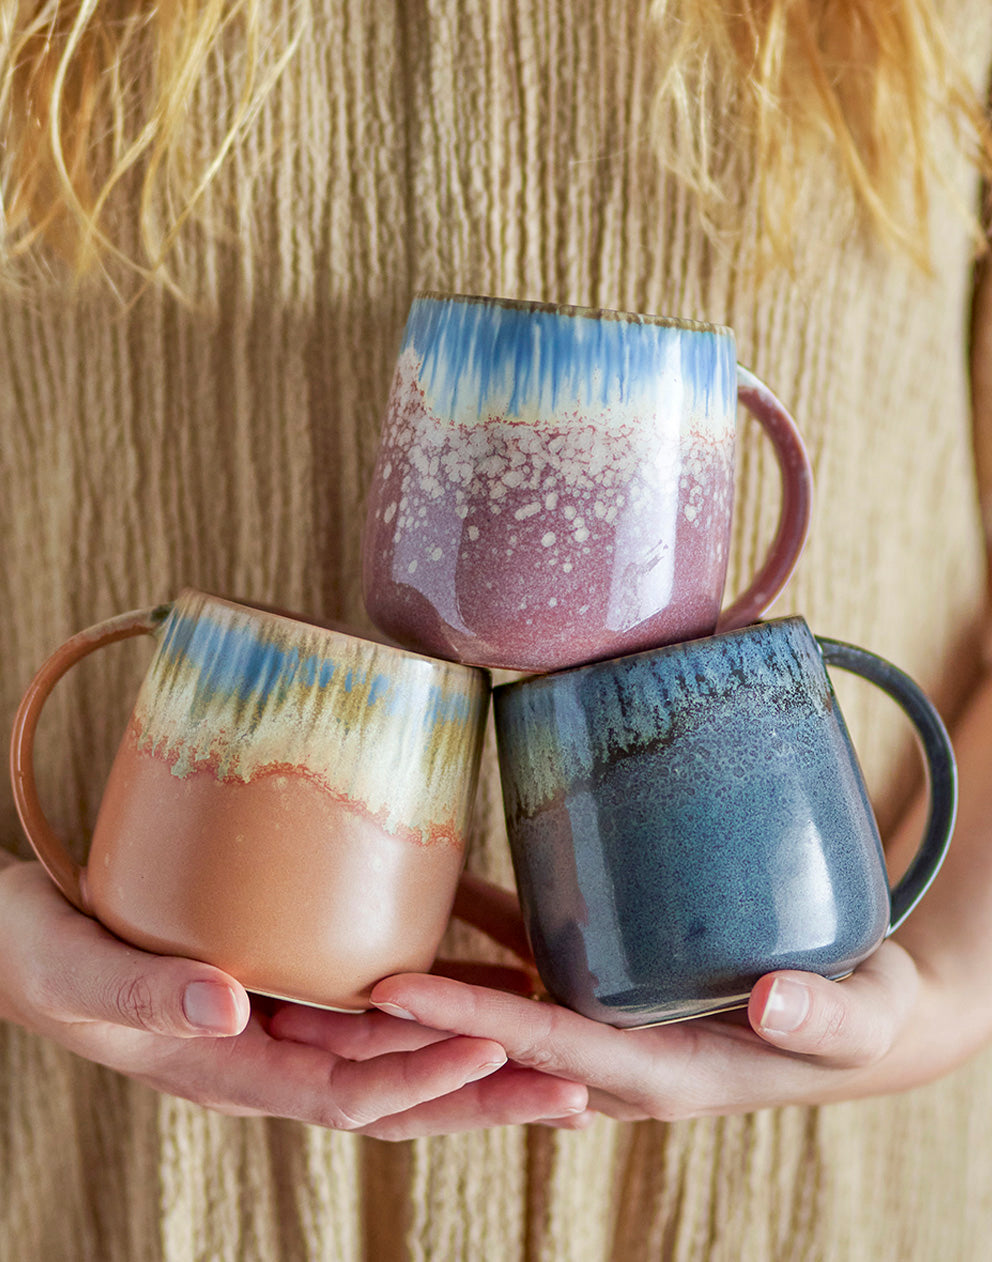 Large Stoneware Mugs in Terracotta, Grey & Purple